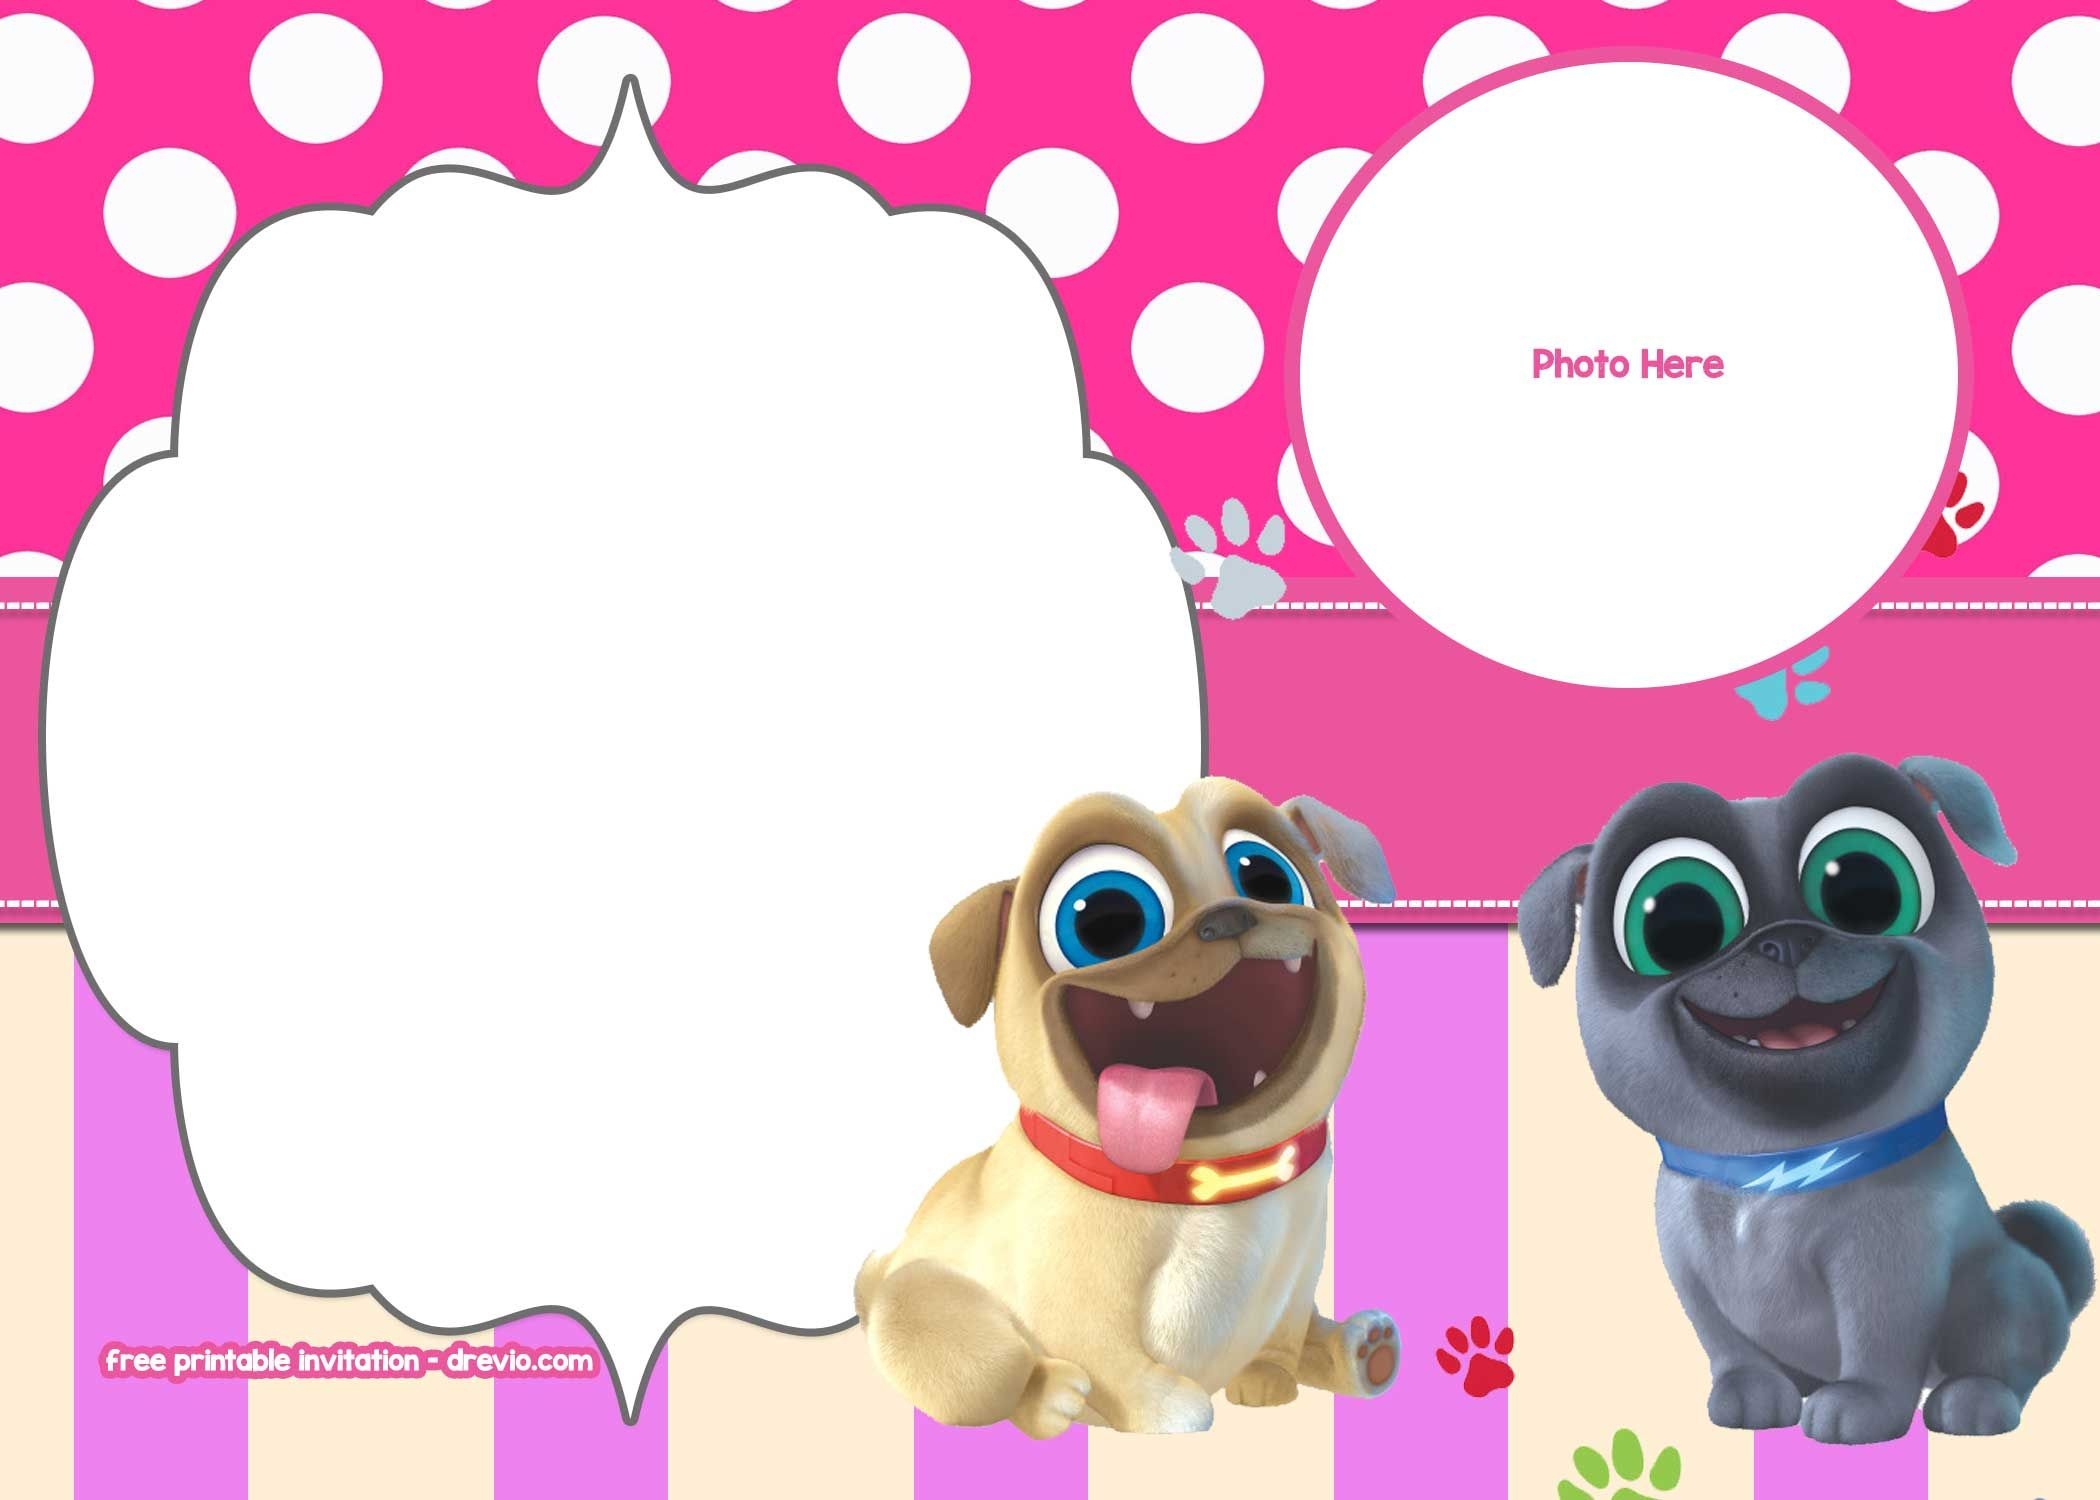 Free Disney Puppy Dog Pals Invitation Templates | Free Printable - Free Printable Puppy Dog Birthday Invitations